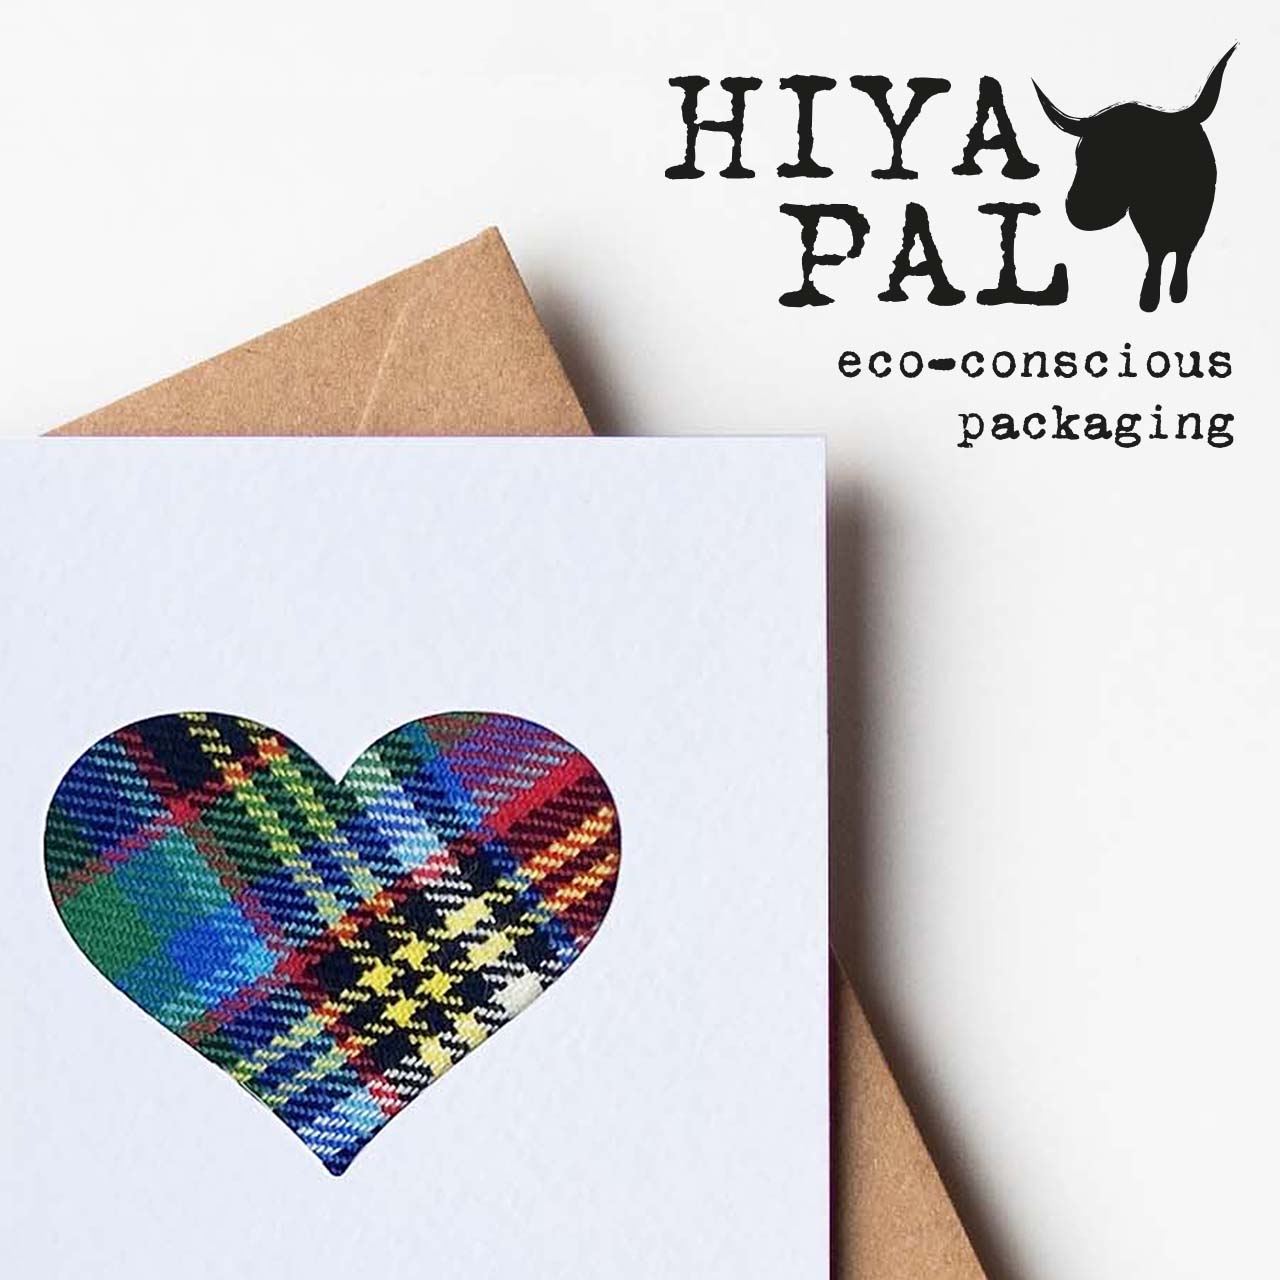 scottish card with tartan heart and brown envelope with Hiya Pal logo